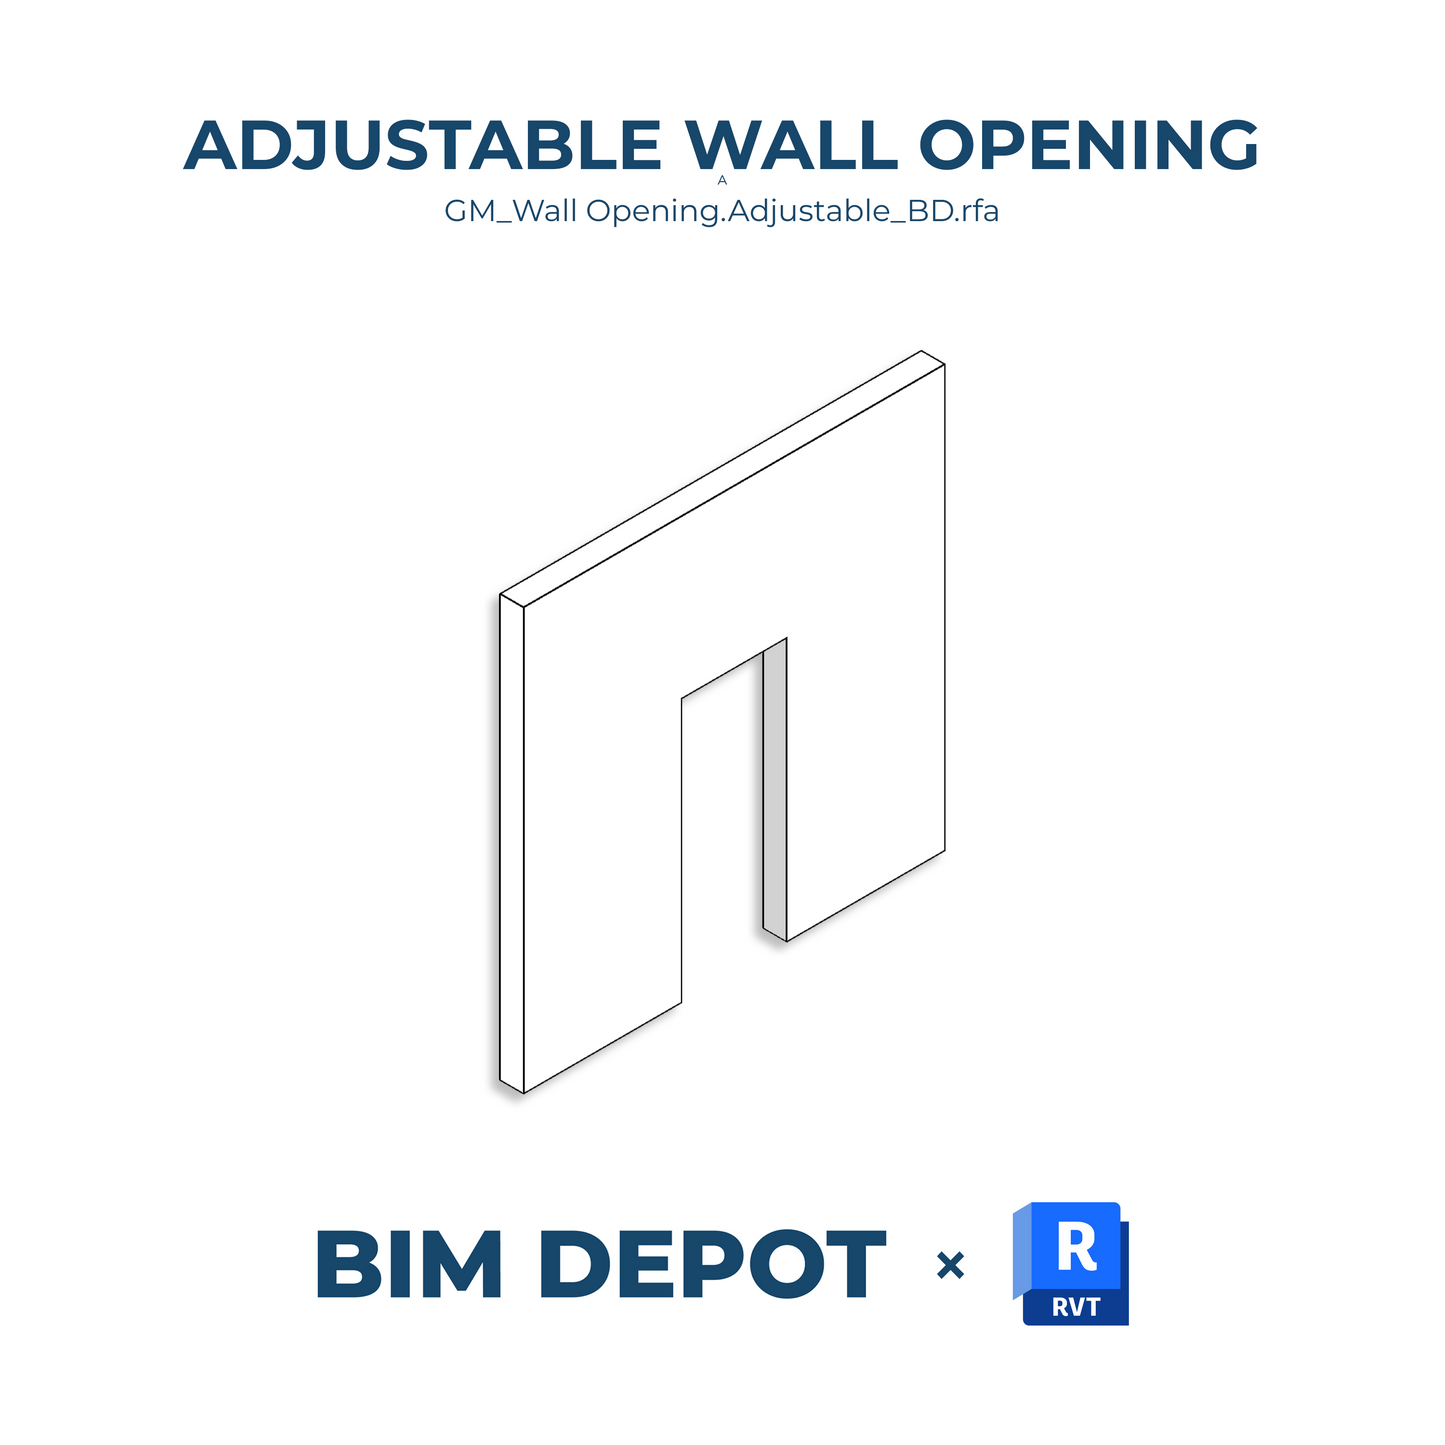 Wall Opening - Adjustable